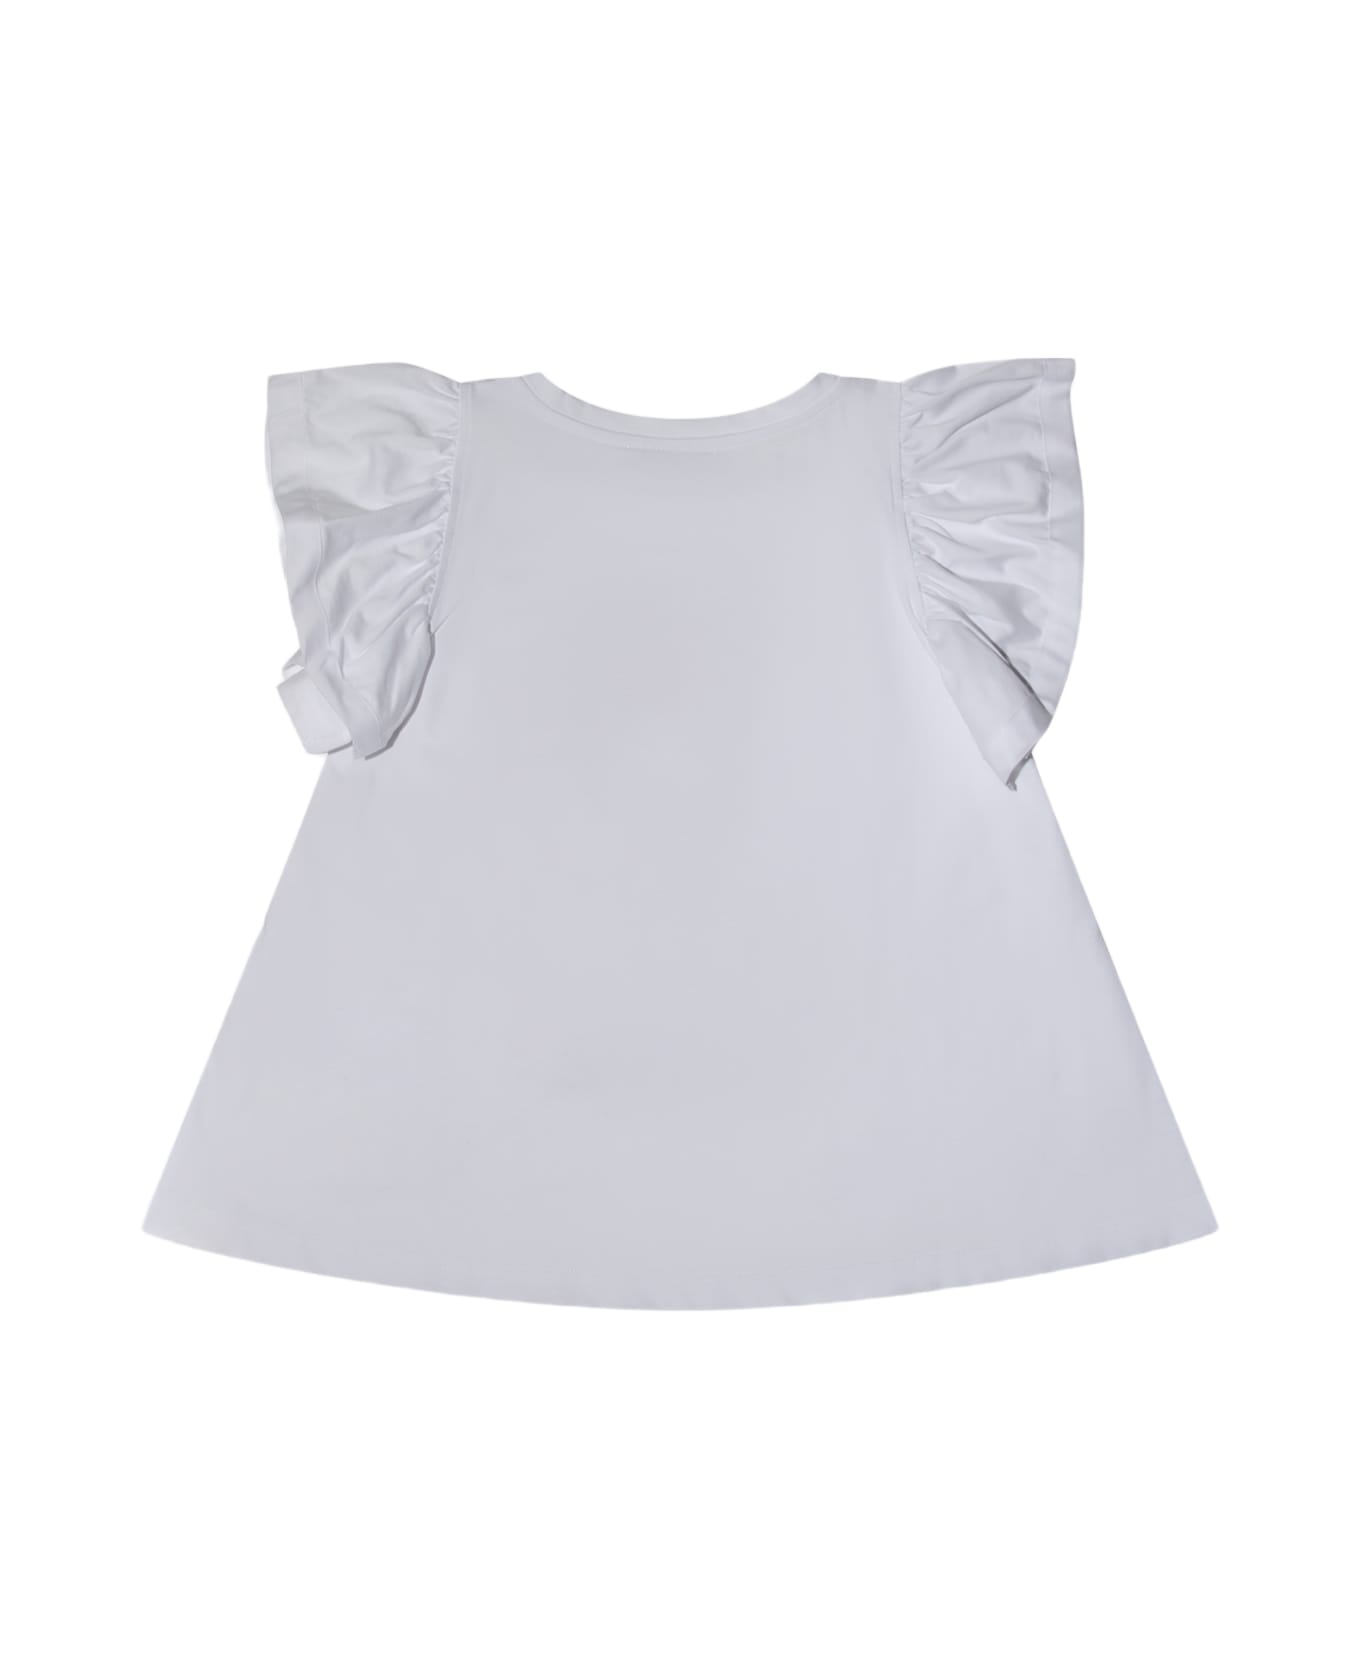 Monnalisa White Cotton T-shirt - White Tシャツ＆ポロシャツ